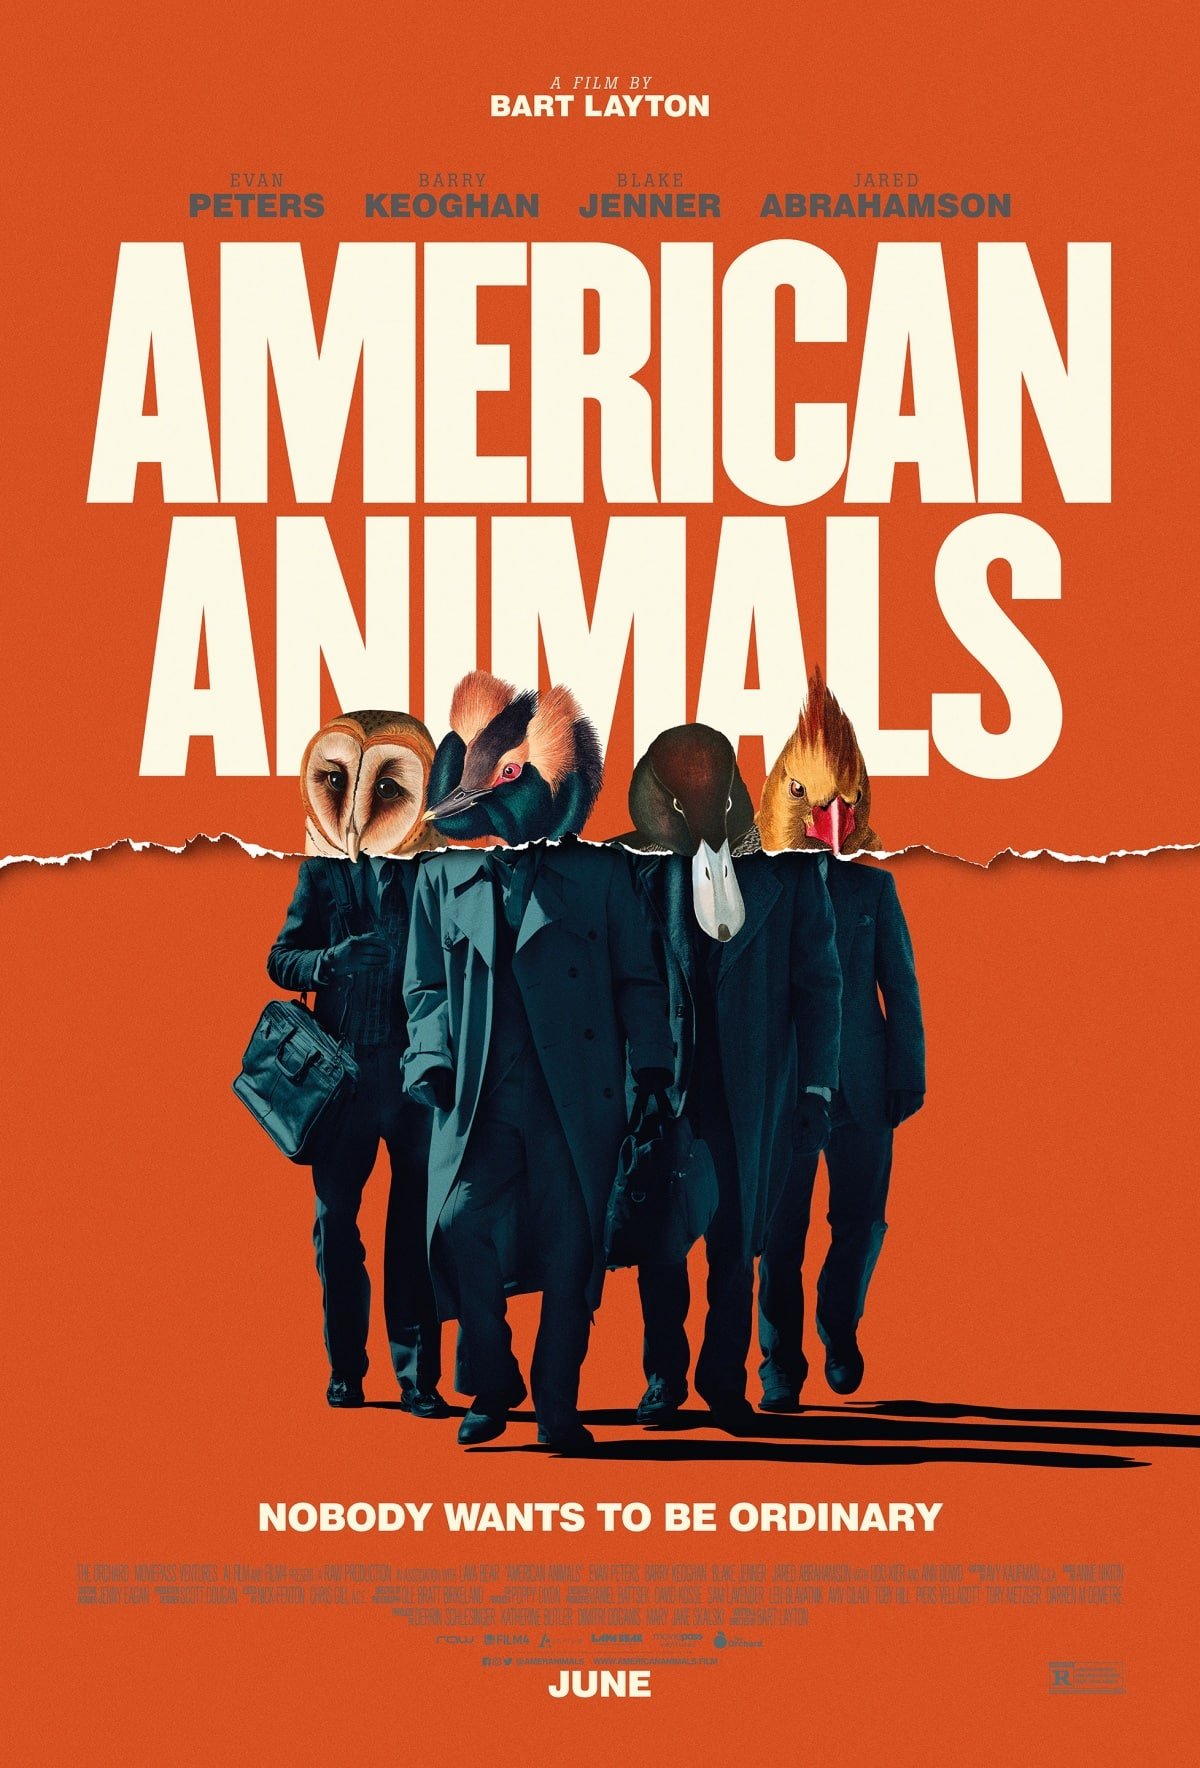 Theatrical release poster of the 2018 heist film American Animals with Evan Peters as Warren Lipka